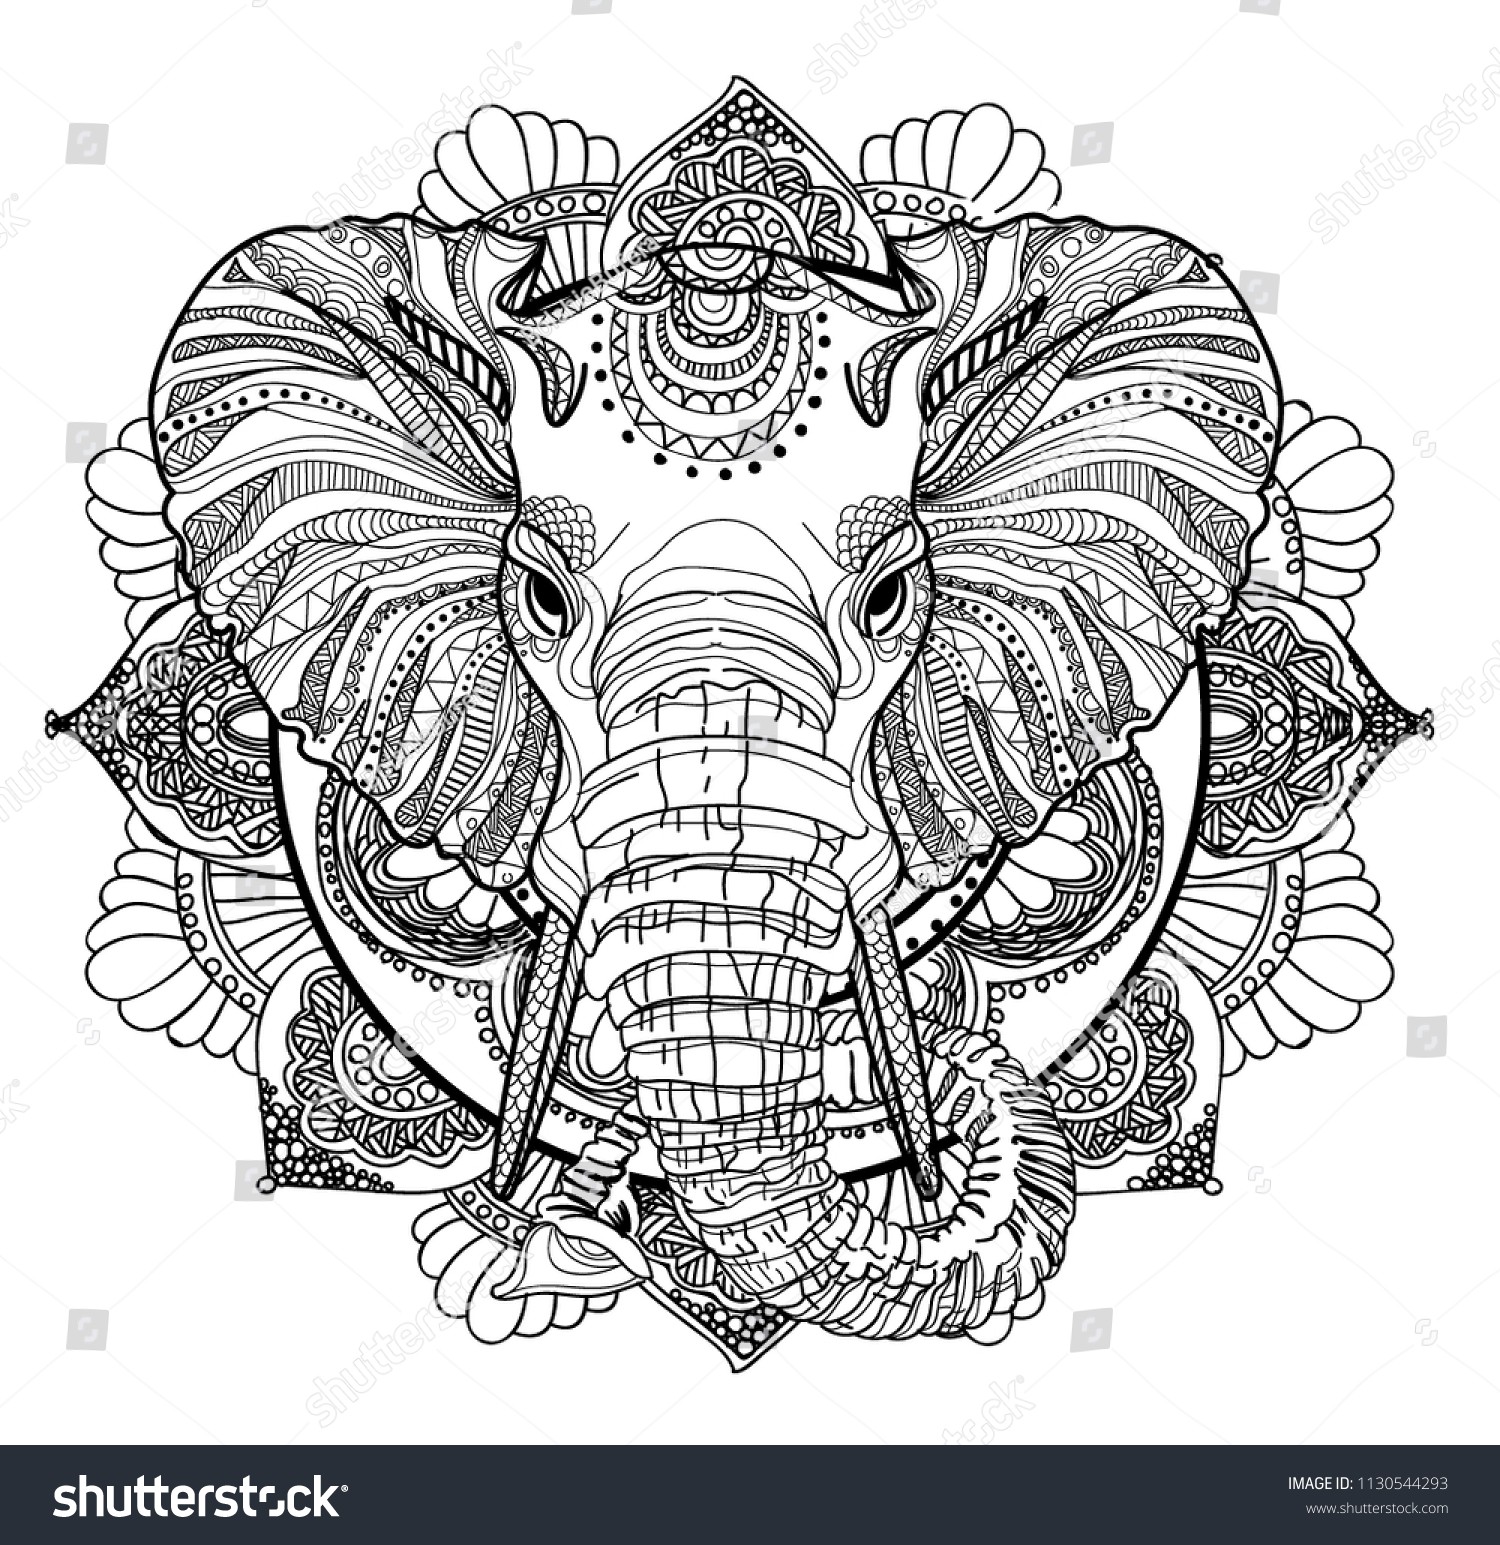 pics of outline of mandela elephants